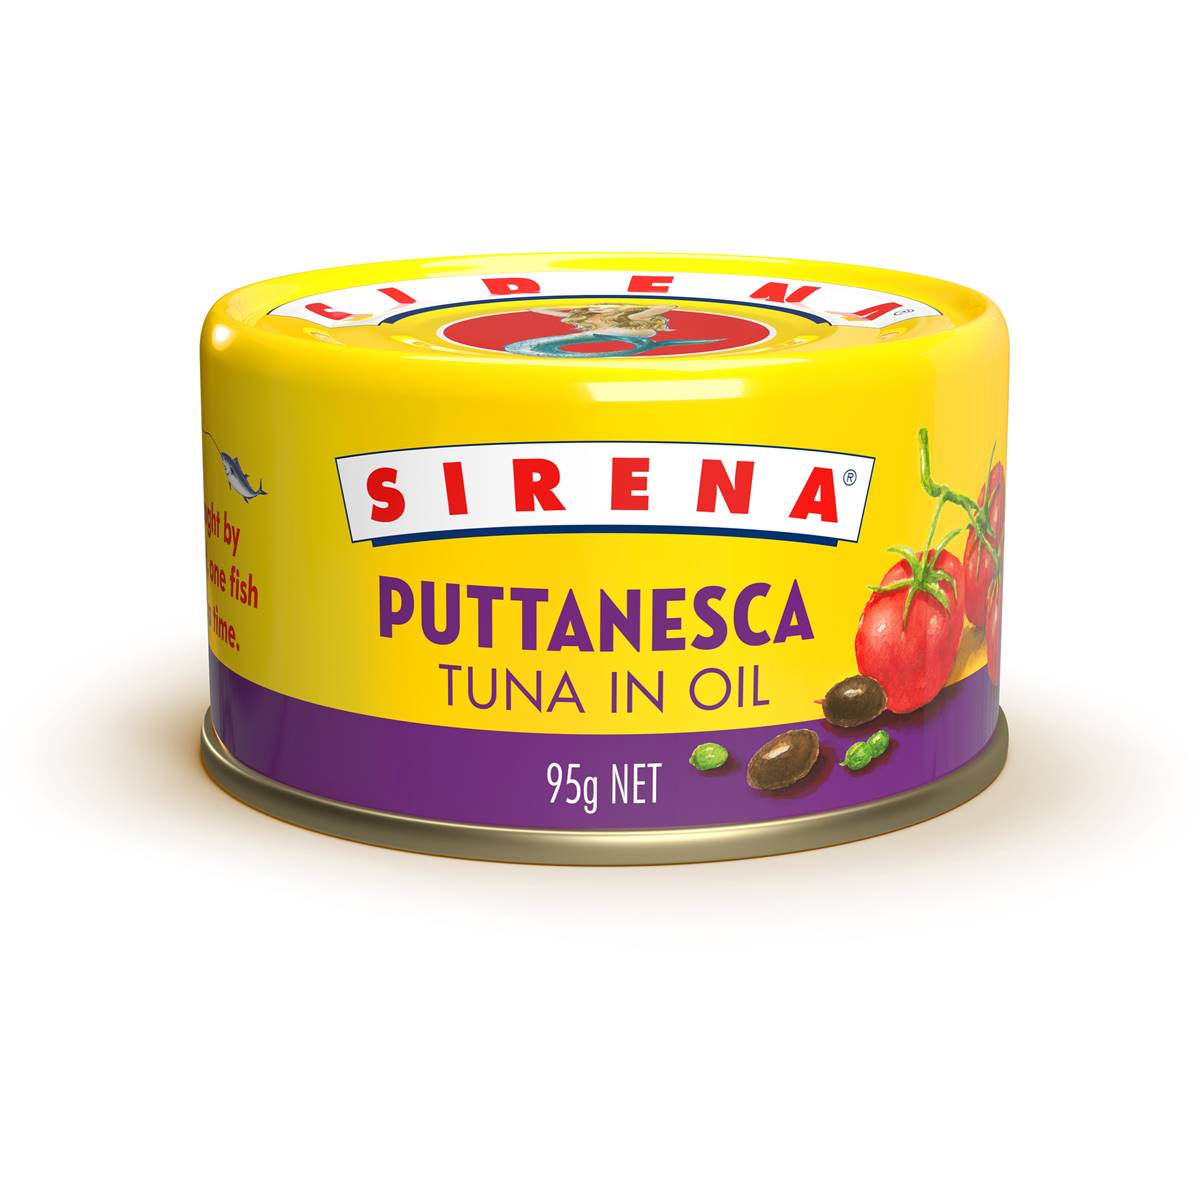 Sirena Tuna Puttanesca 95g